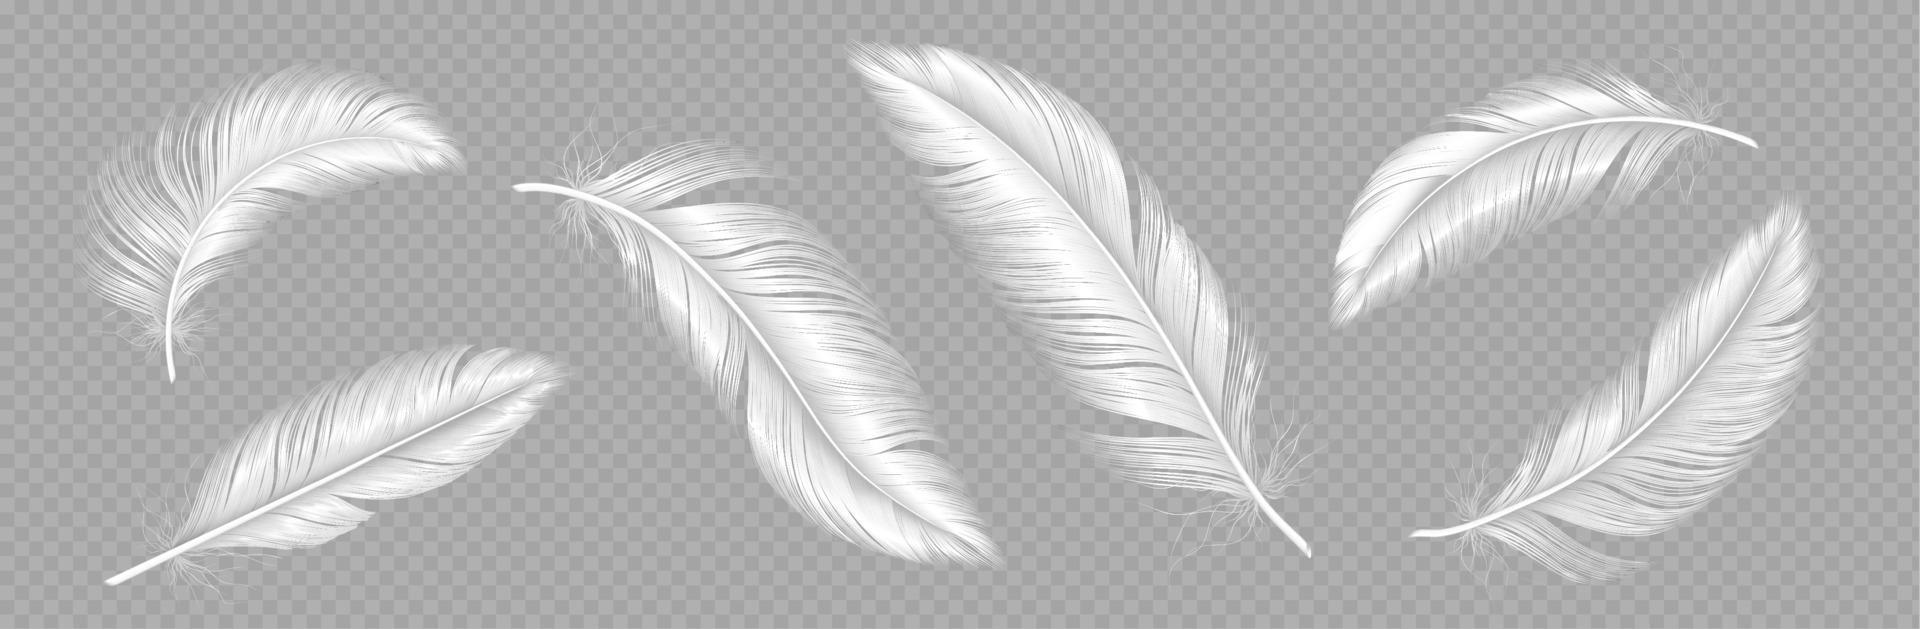 White soft feather, bird plumage set vector